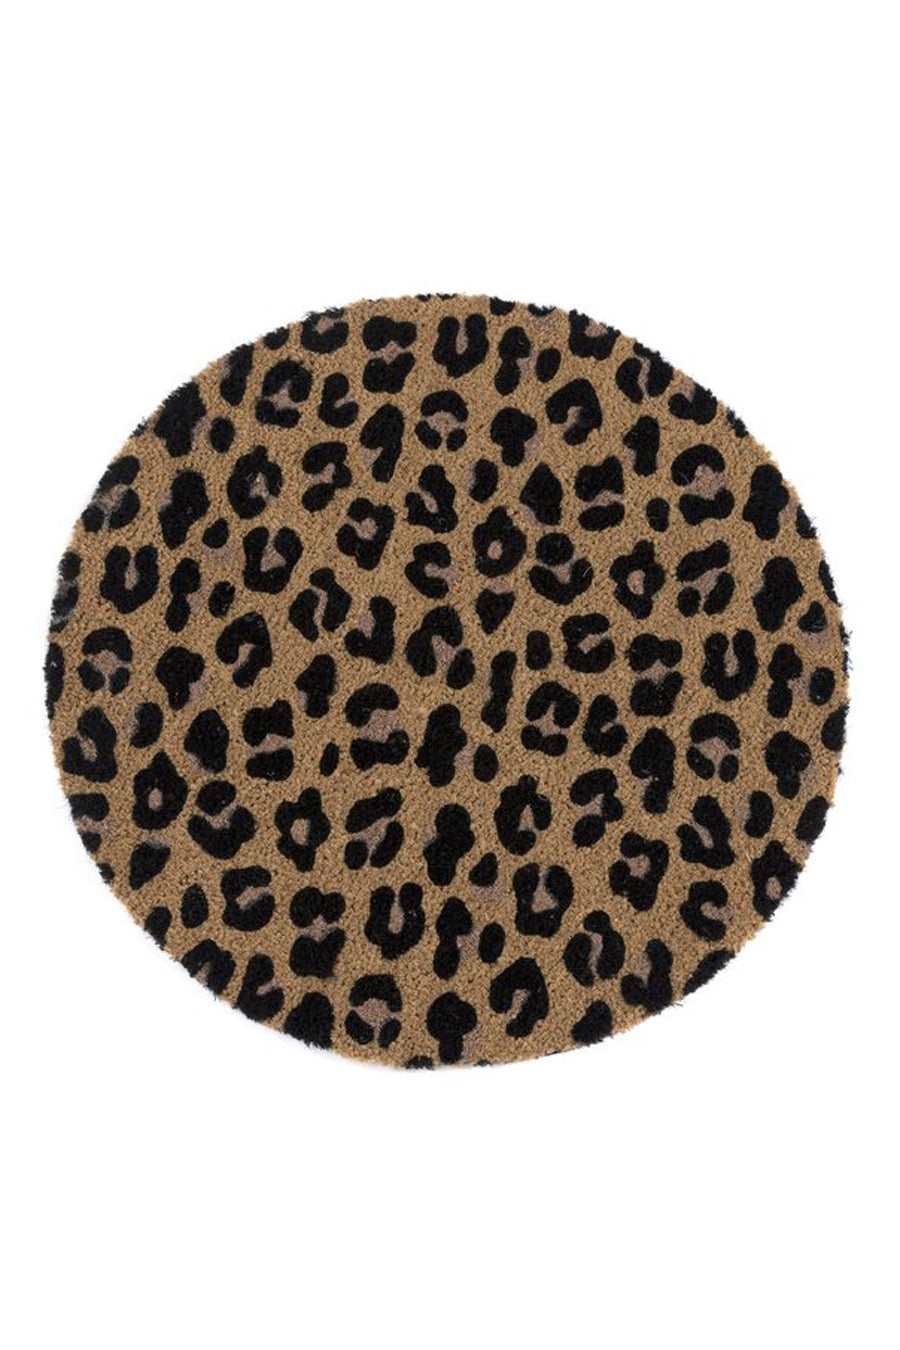 Leopard Round Doormat